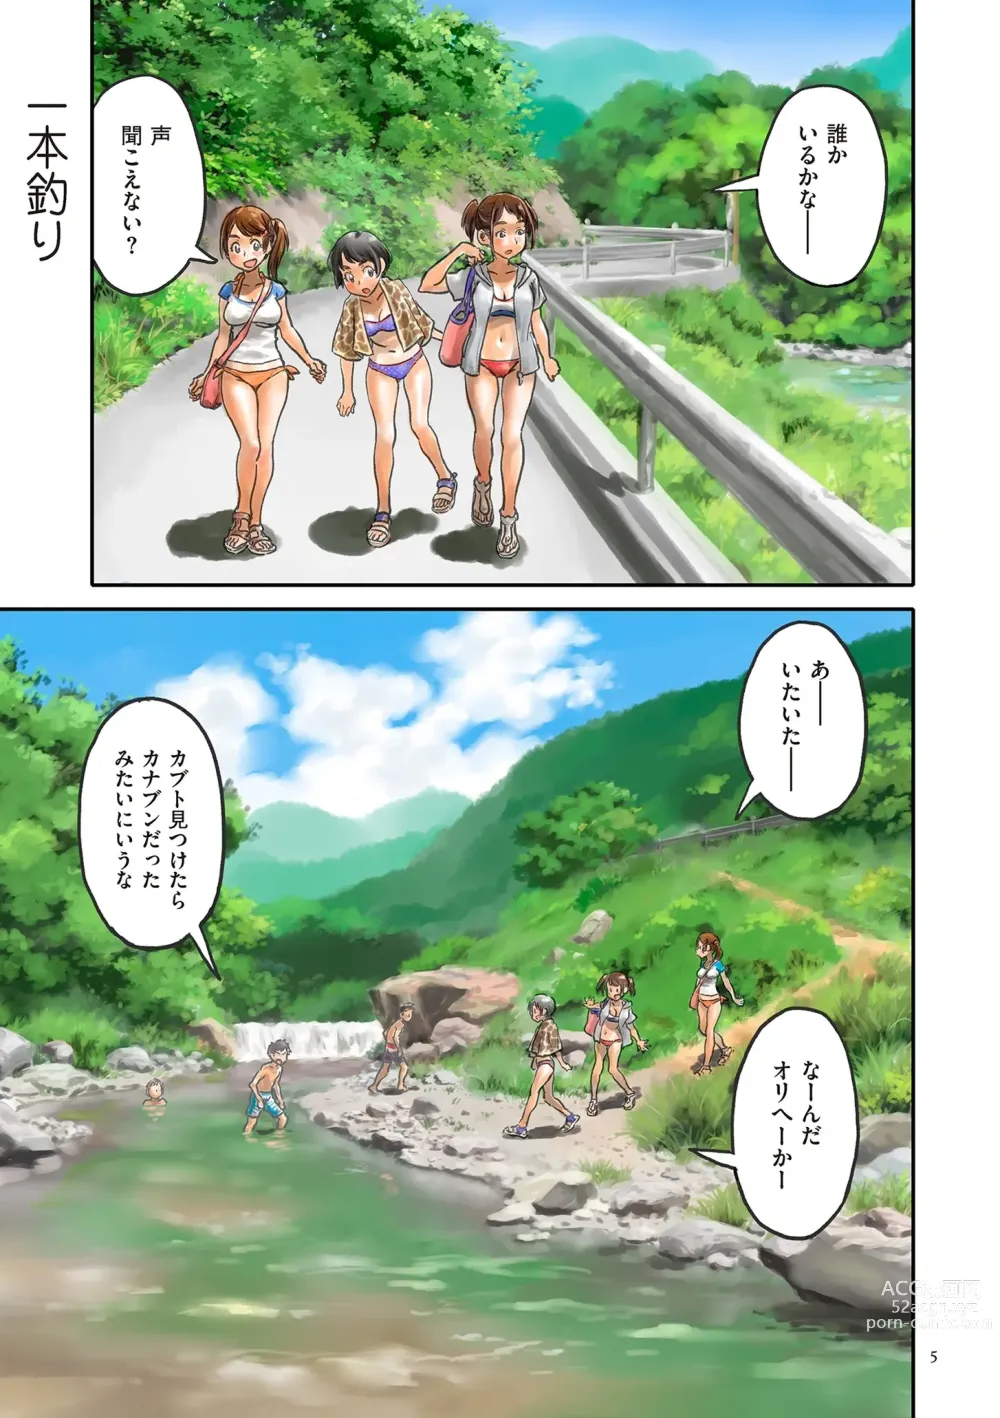 Page 5 of manga Fujicolor